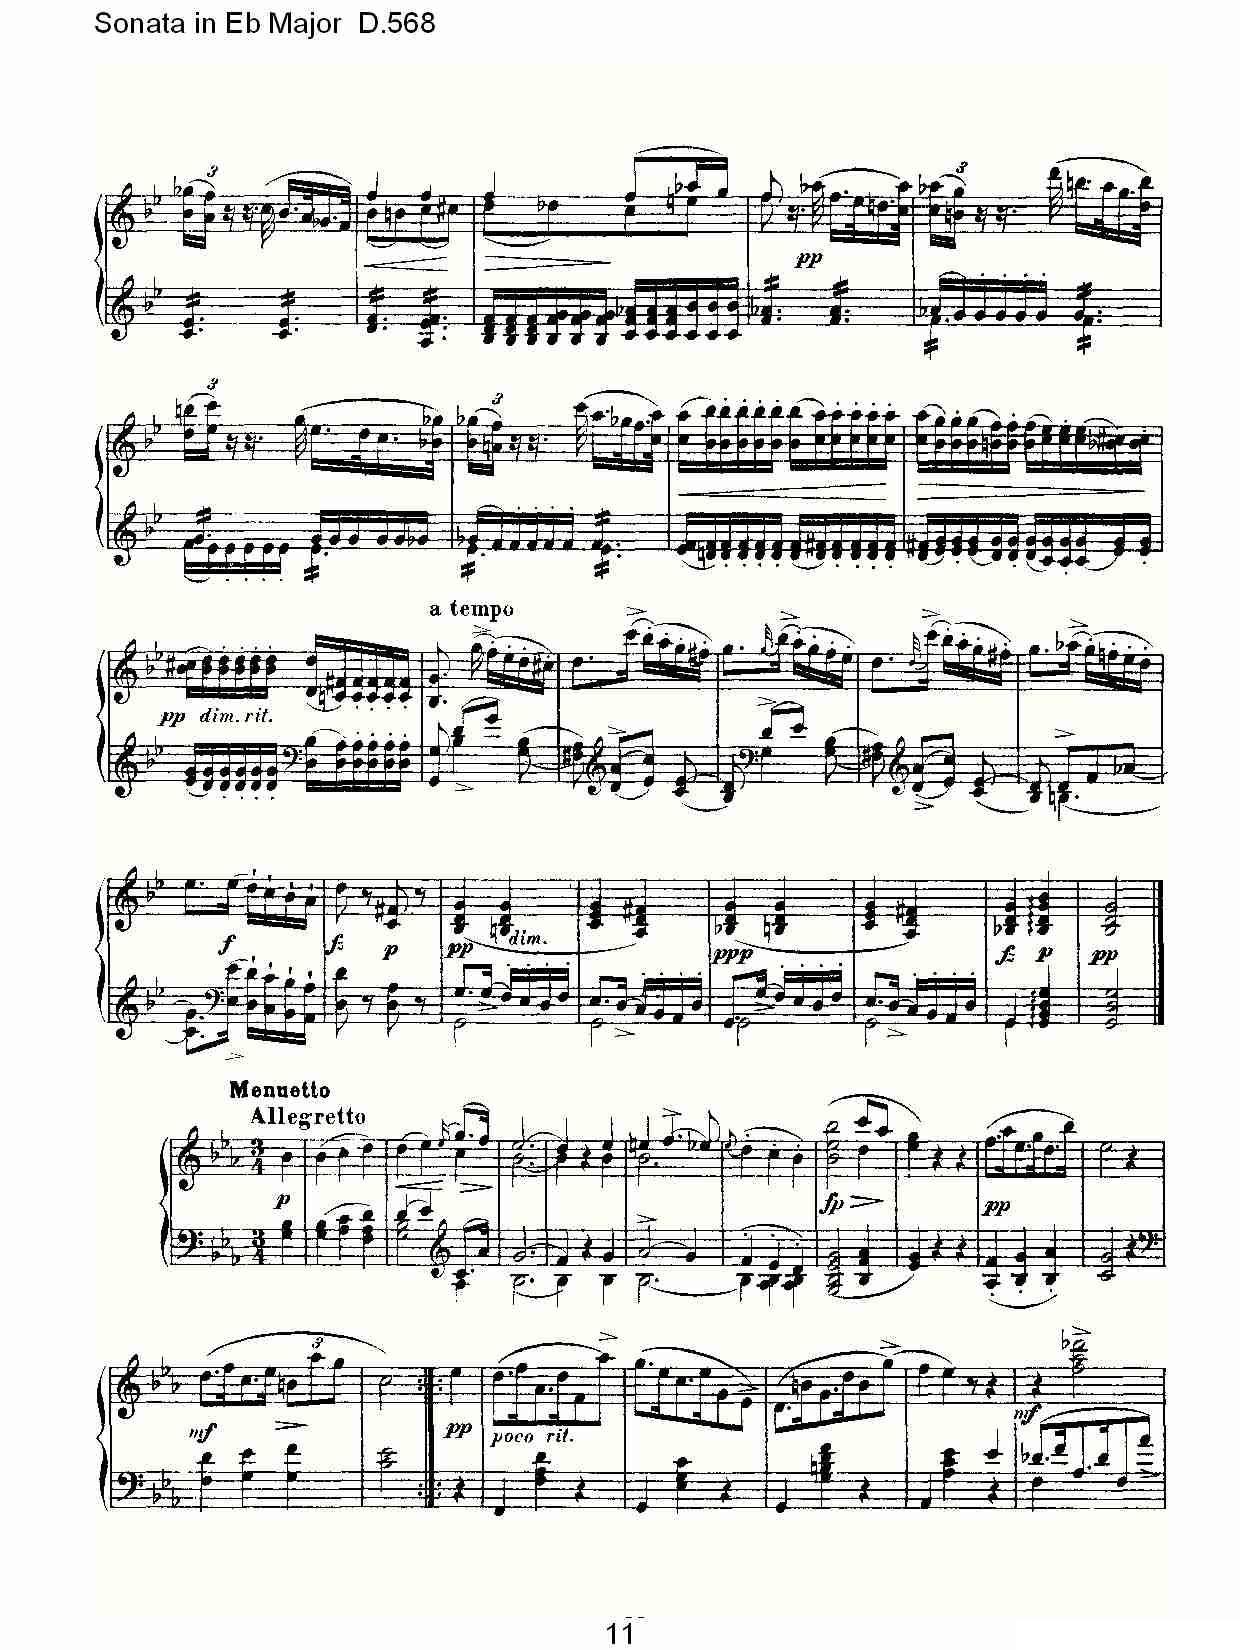 Sonata in Eb Major D.568（Eb大调奏鸣曲 D.568）钢琴曲谱（图11）